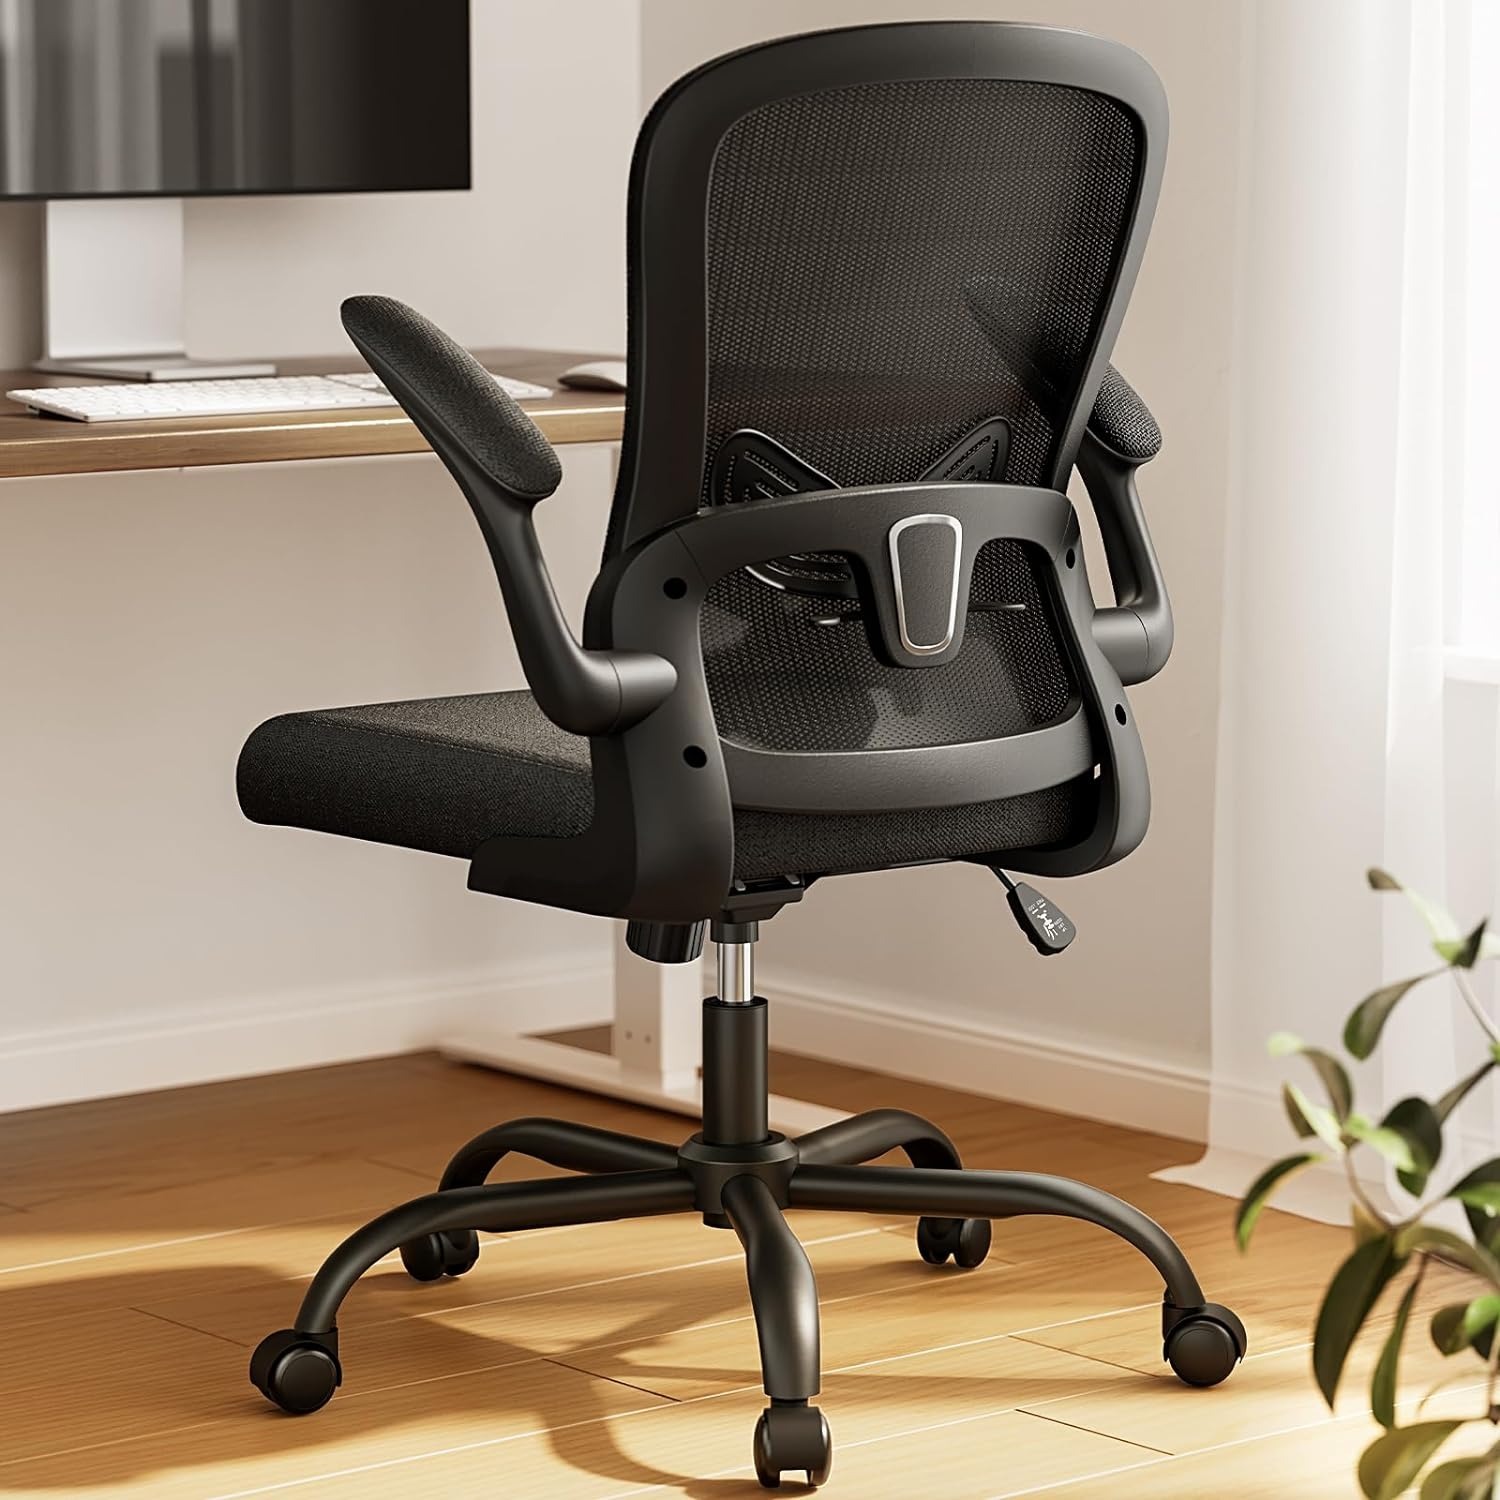 Marsail Ergonomic Office Desk Chair w/ Adjustable Lumbar Support (Black) $75 + Free Shipping